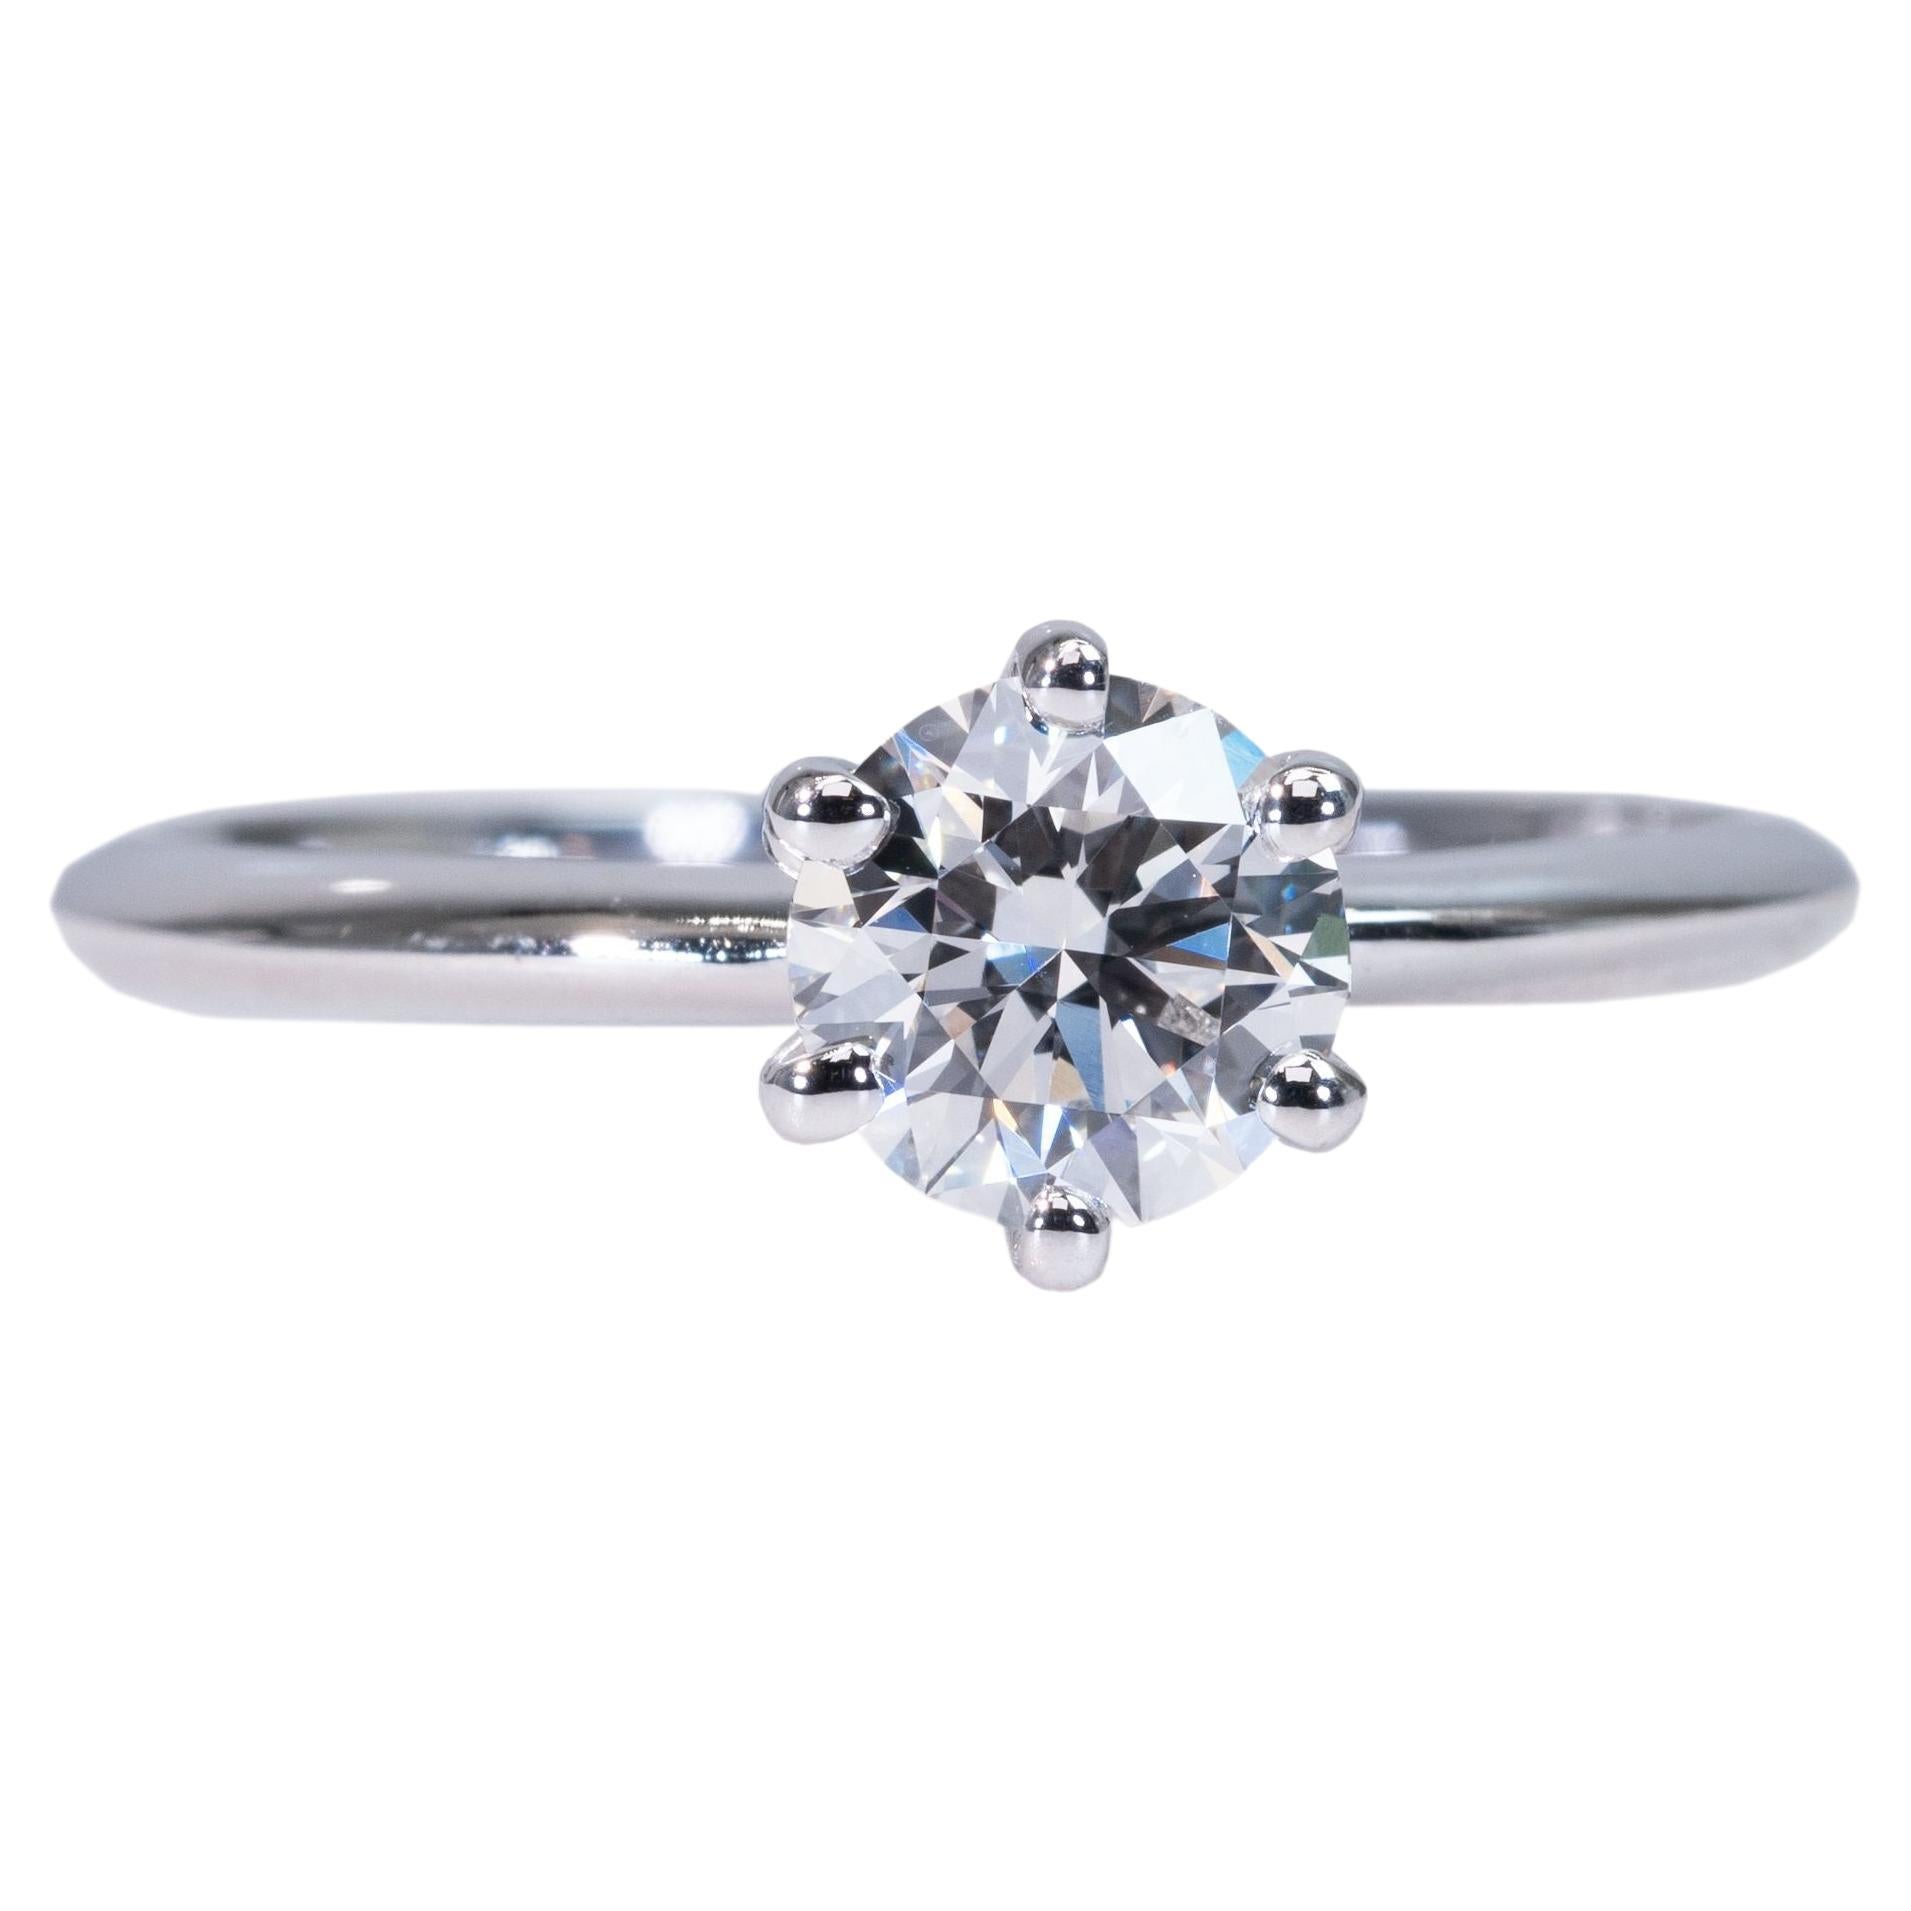 Marvelous 18k White Gold Engagement Ring w/ 1ct Natural Diamonds IGI Certificate